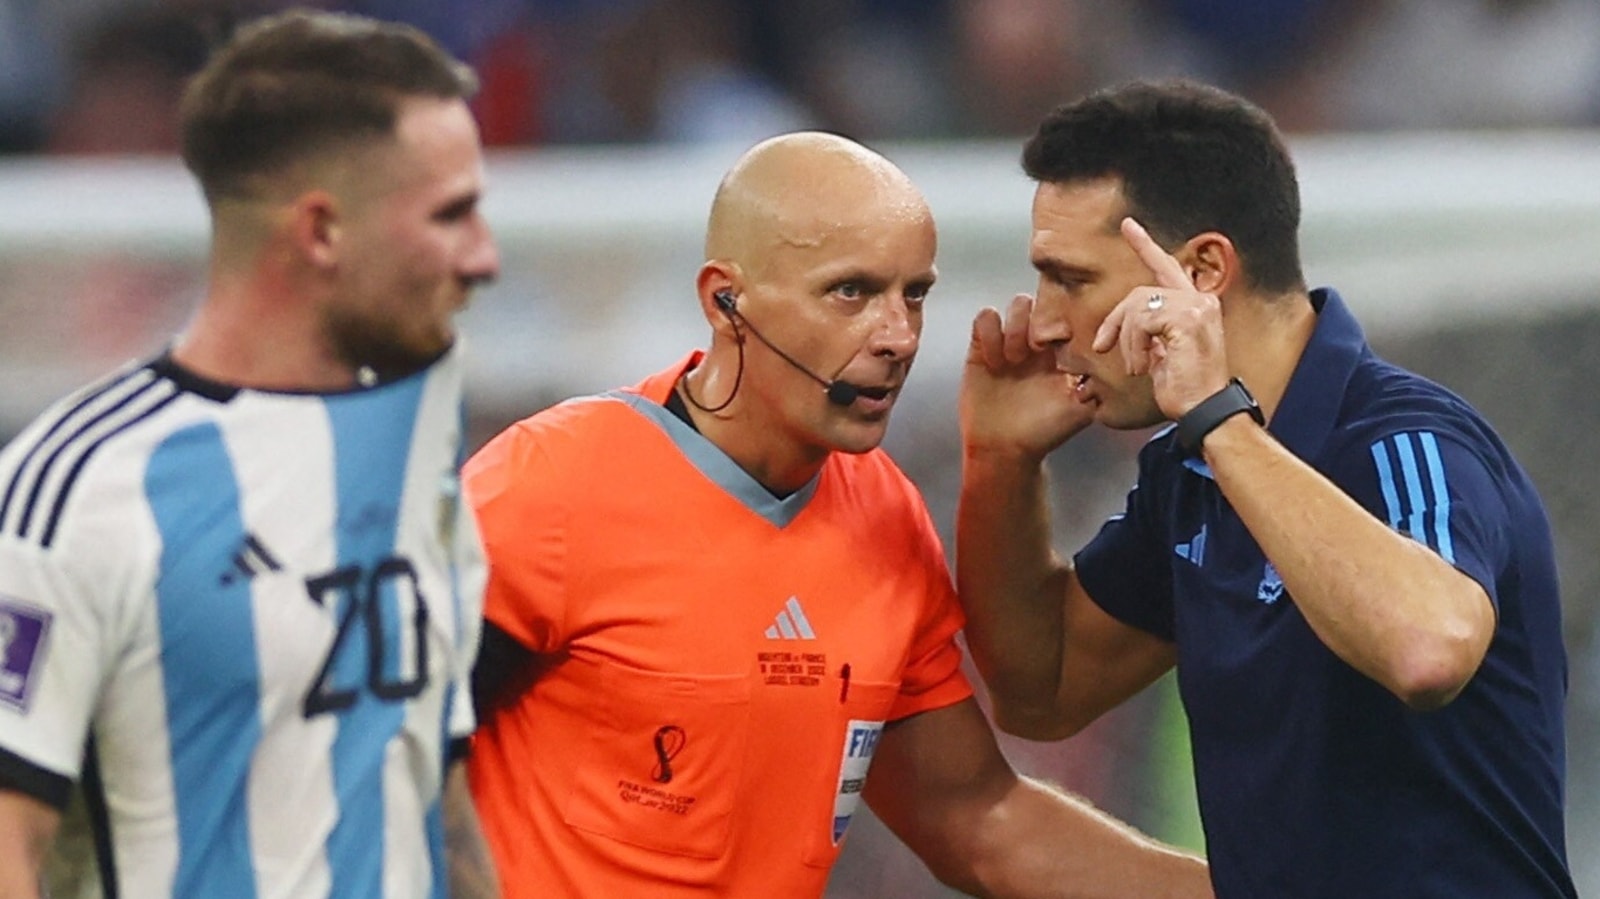 Szymon Marciniak: FIFA World Cup 2022 final: Poland's Szymon Marciniak to  be referee for match between Argentina, France - The Economic Times